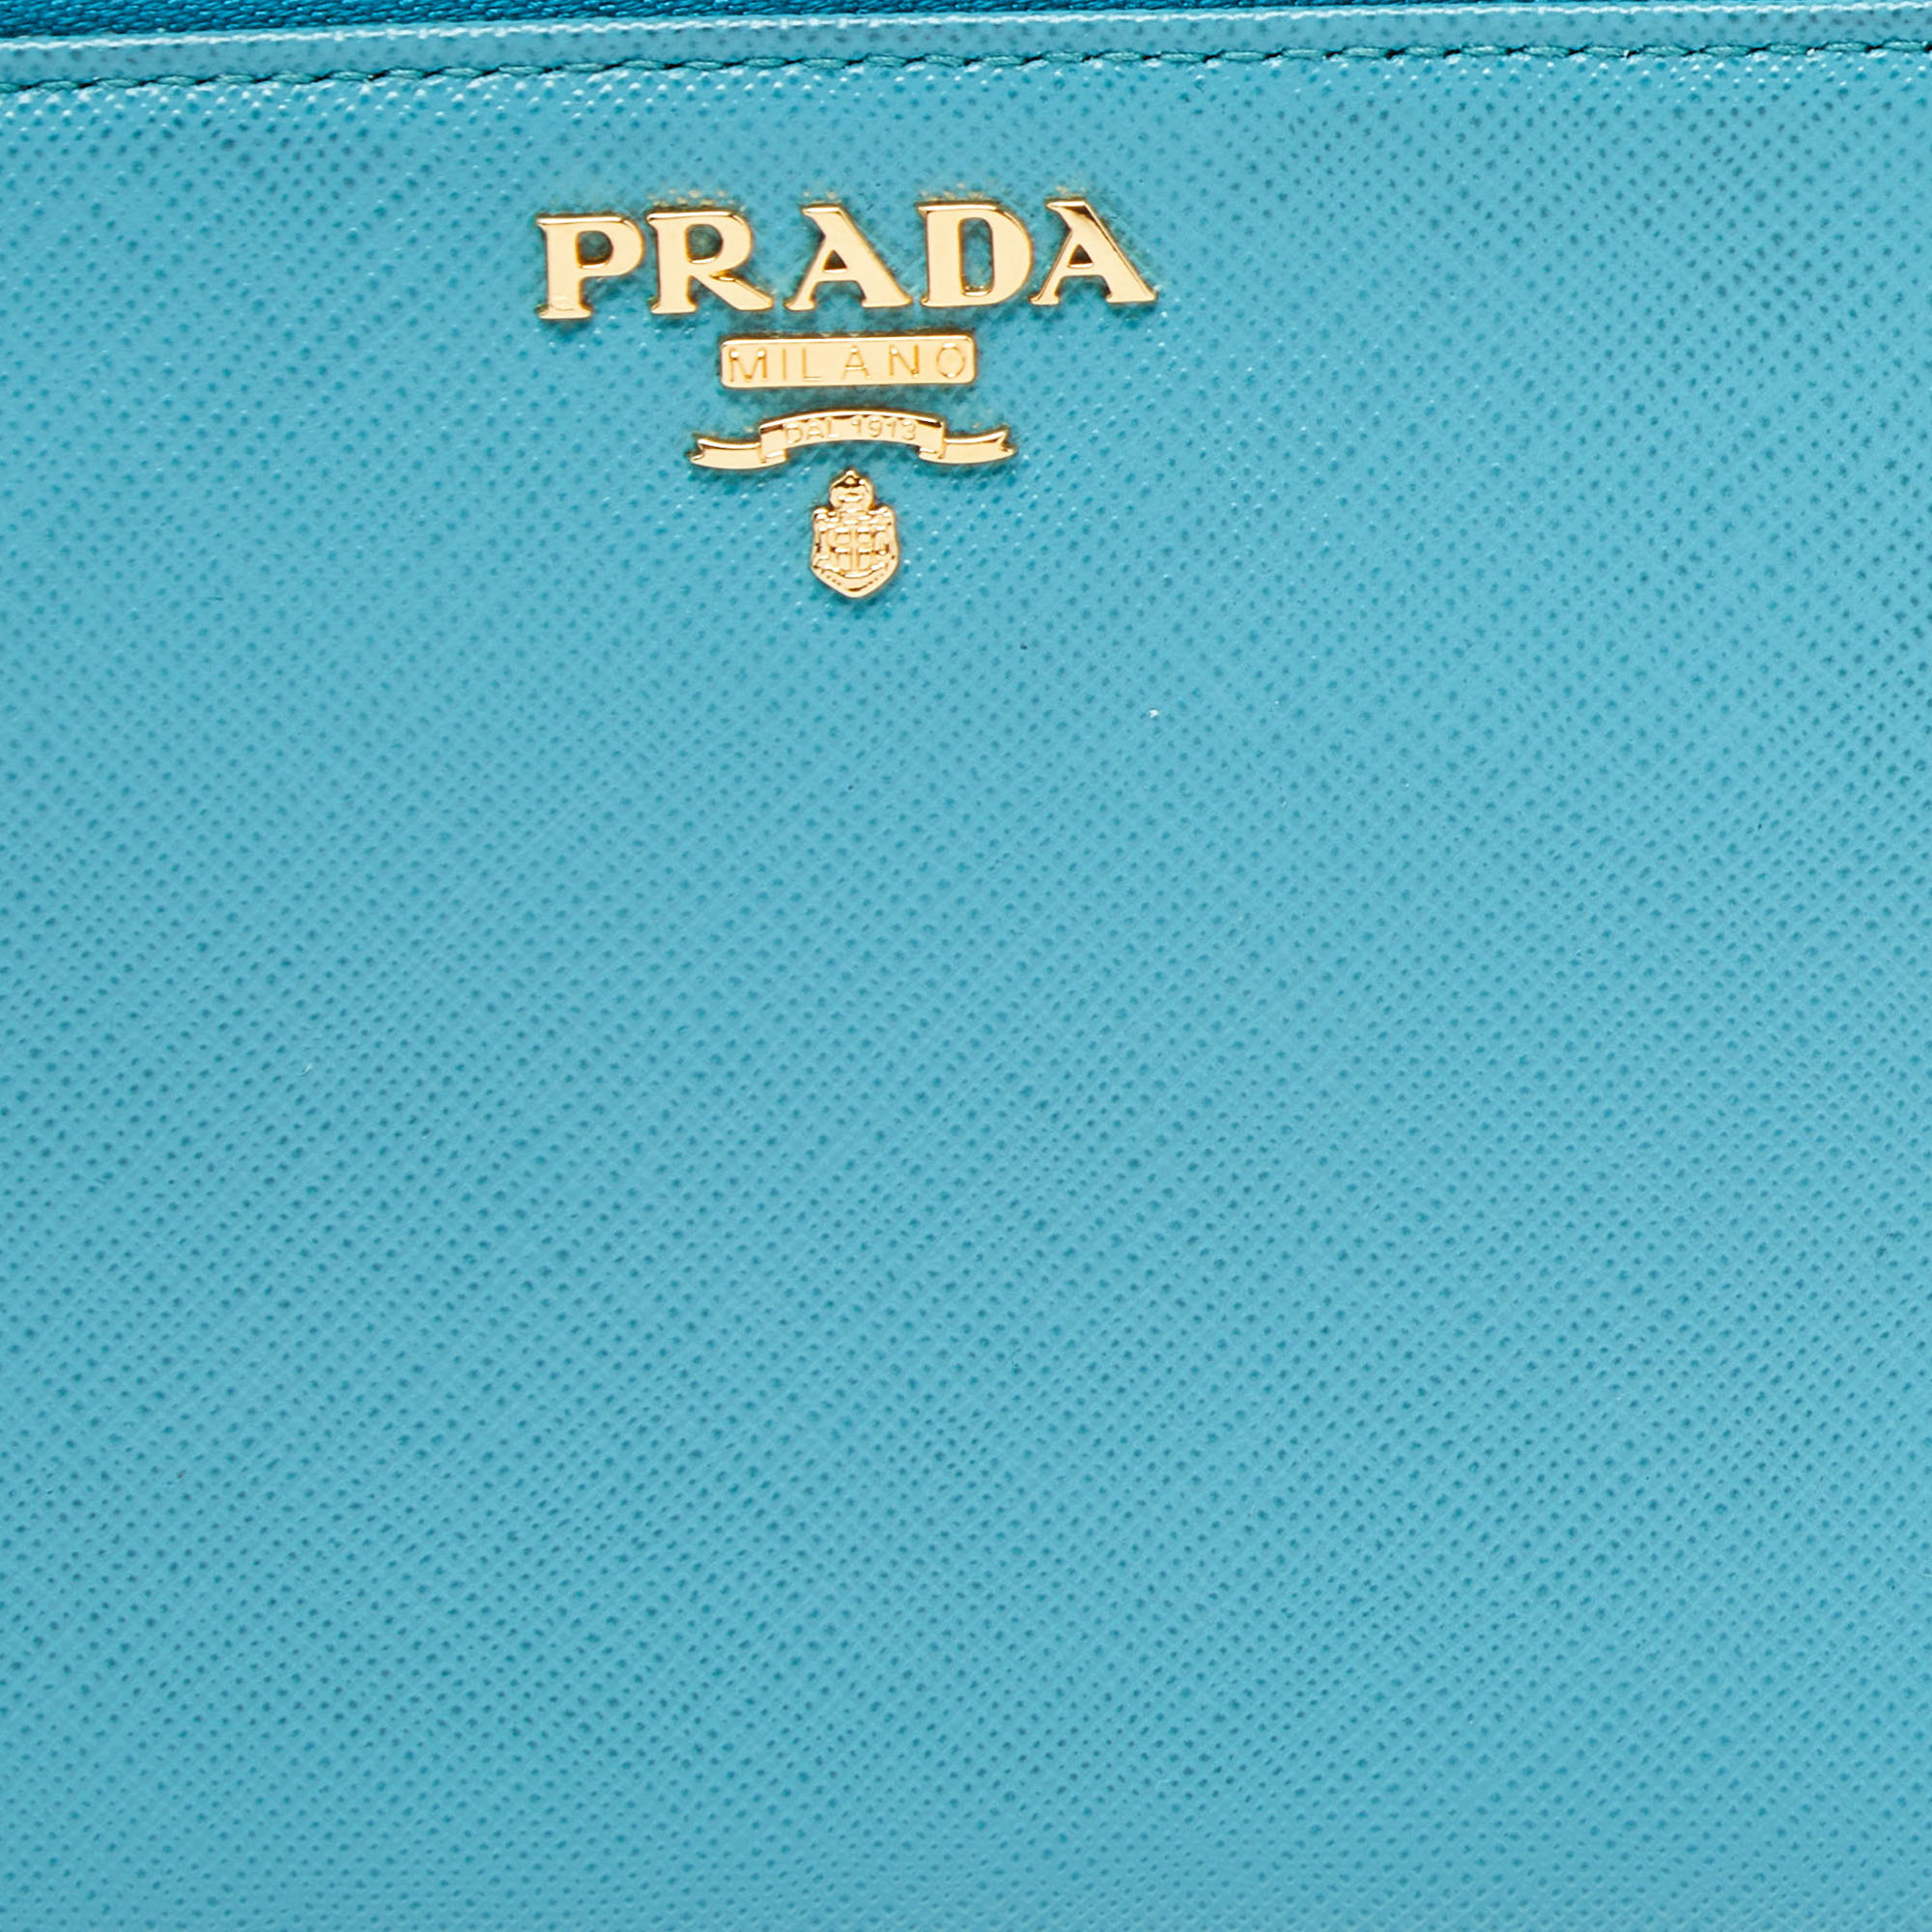 Prada Turquoise Saffiano Leather Zip Around Wallet